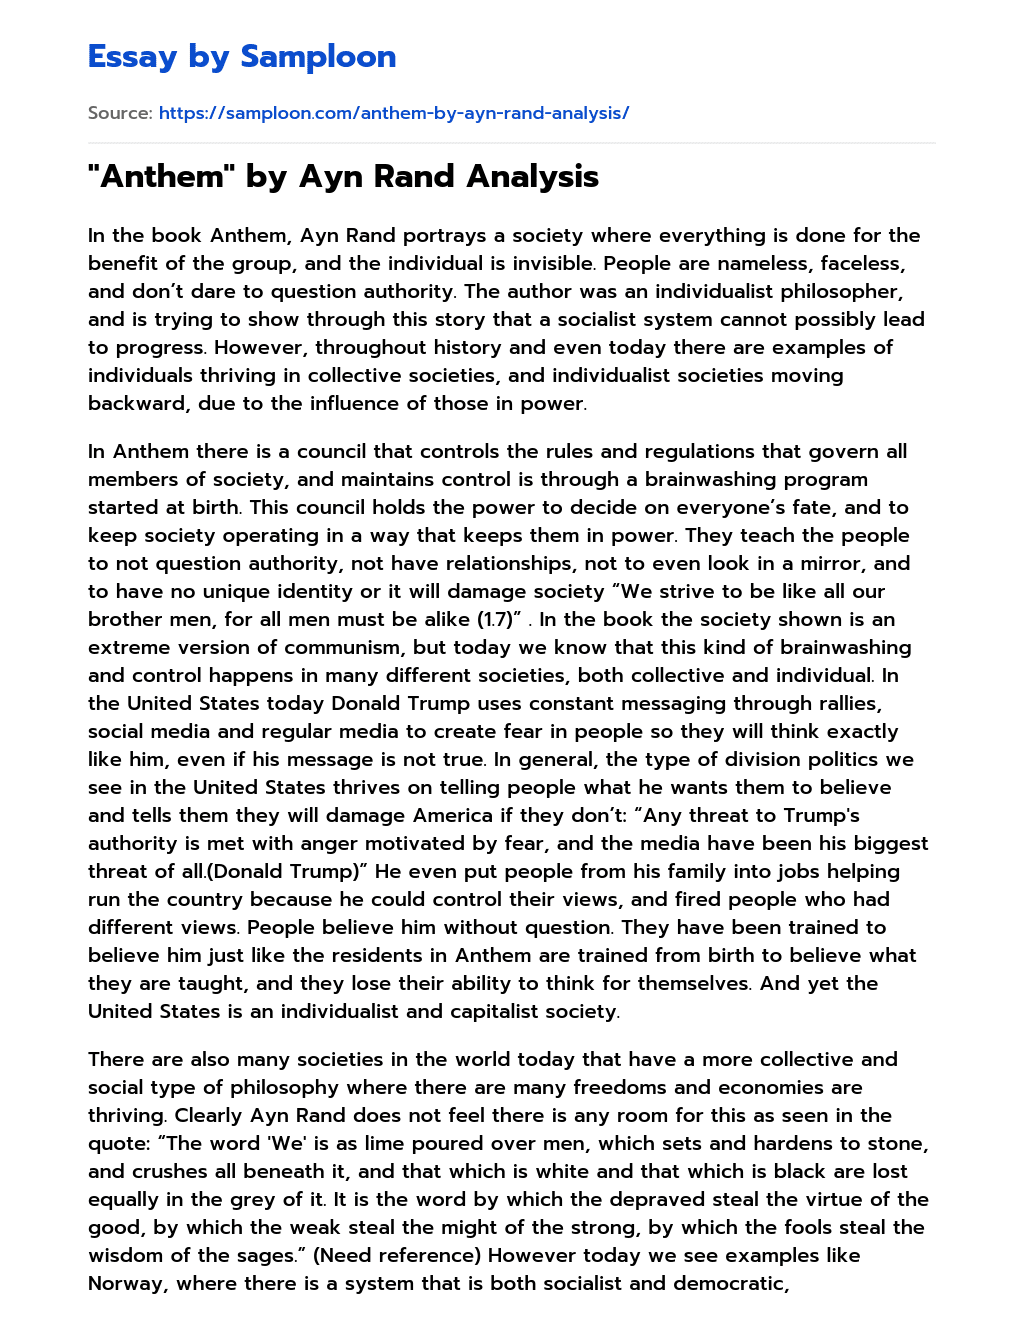 “Anthem” by Ayn Rand Analysis essay